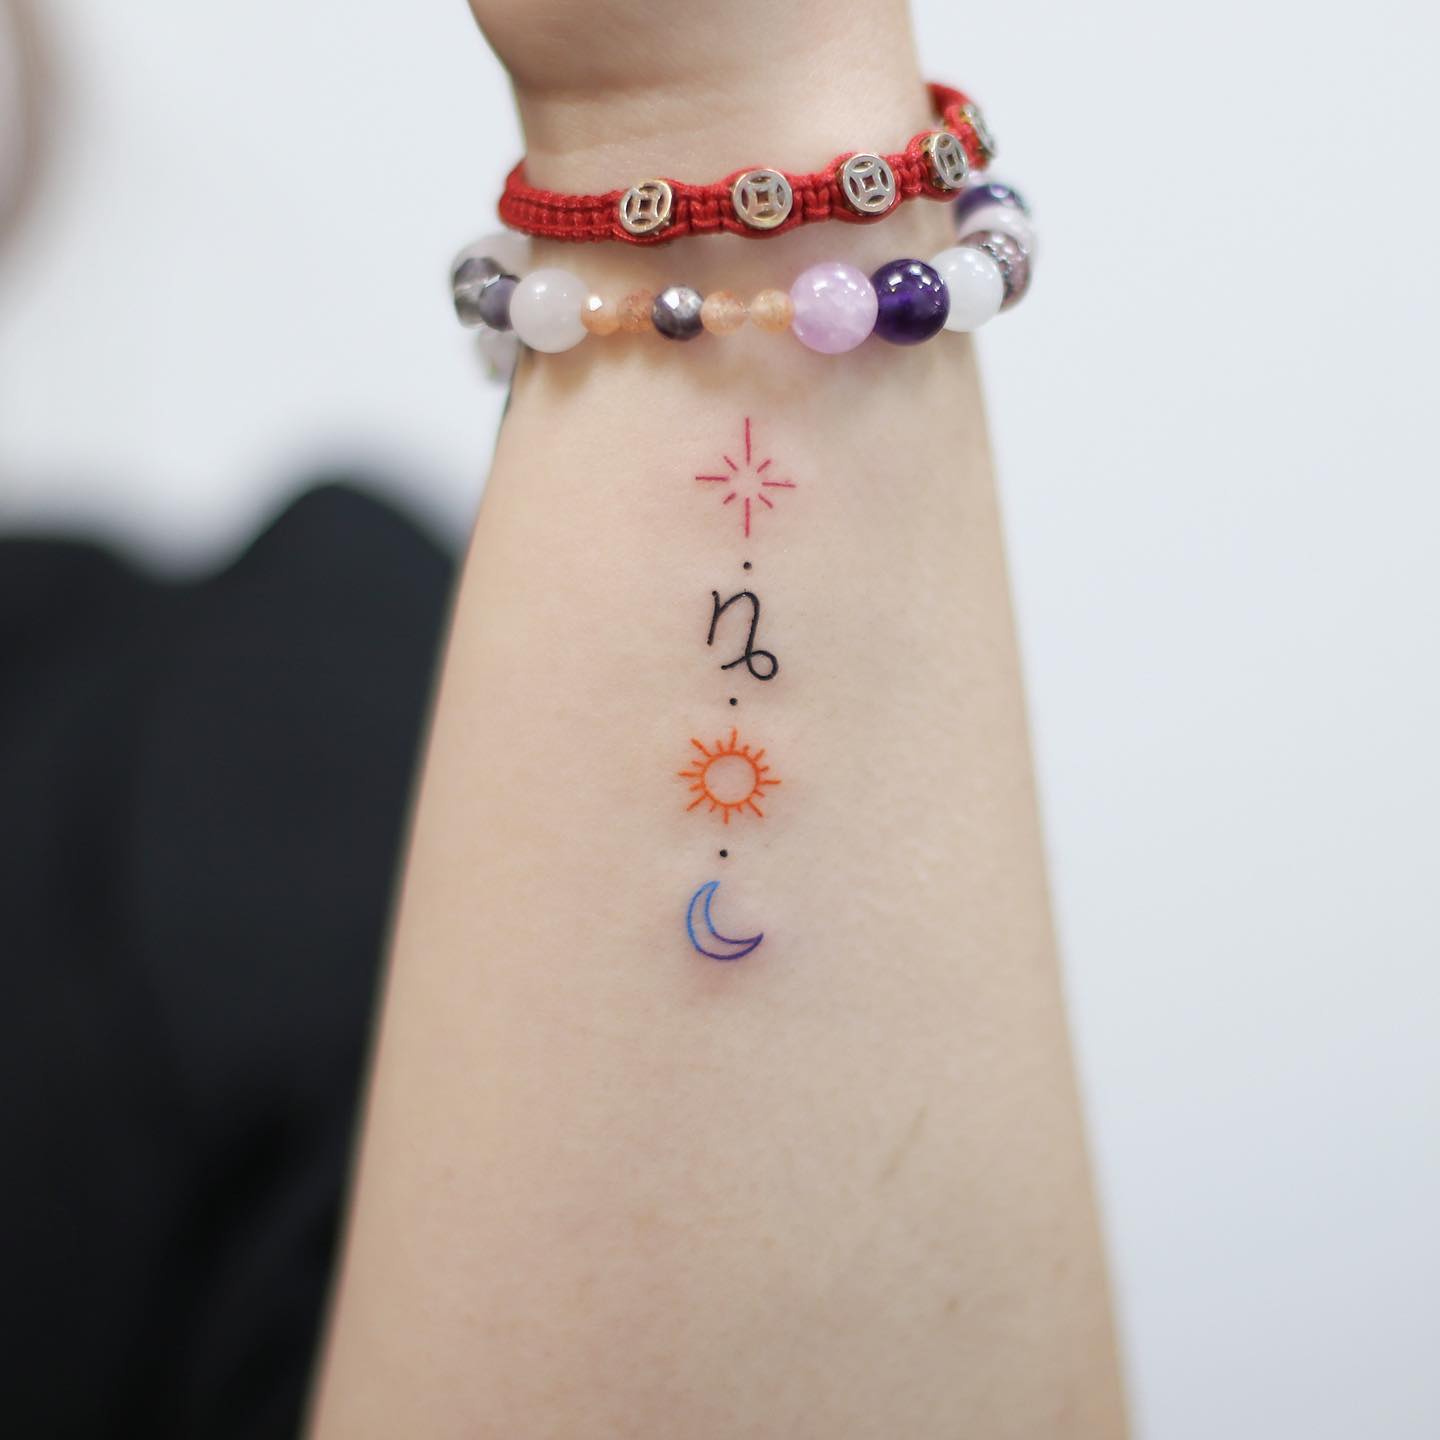 Minimalist style Capricorn symbol, star, sun, and moon tattoo on the wrist